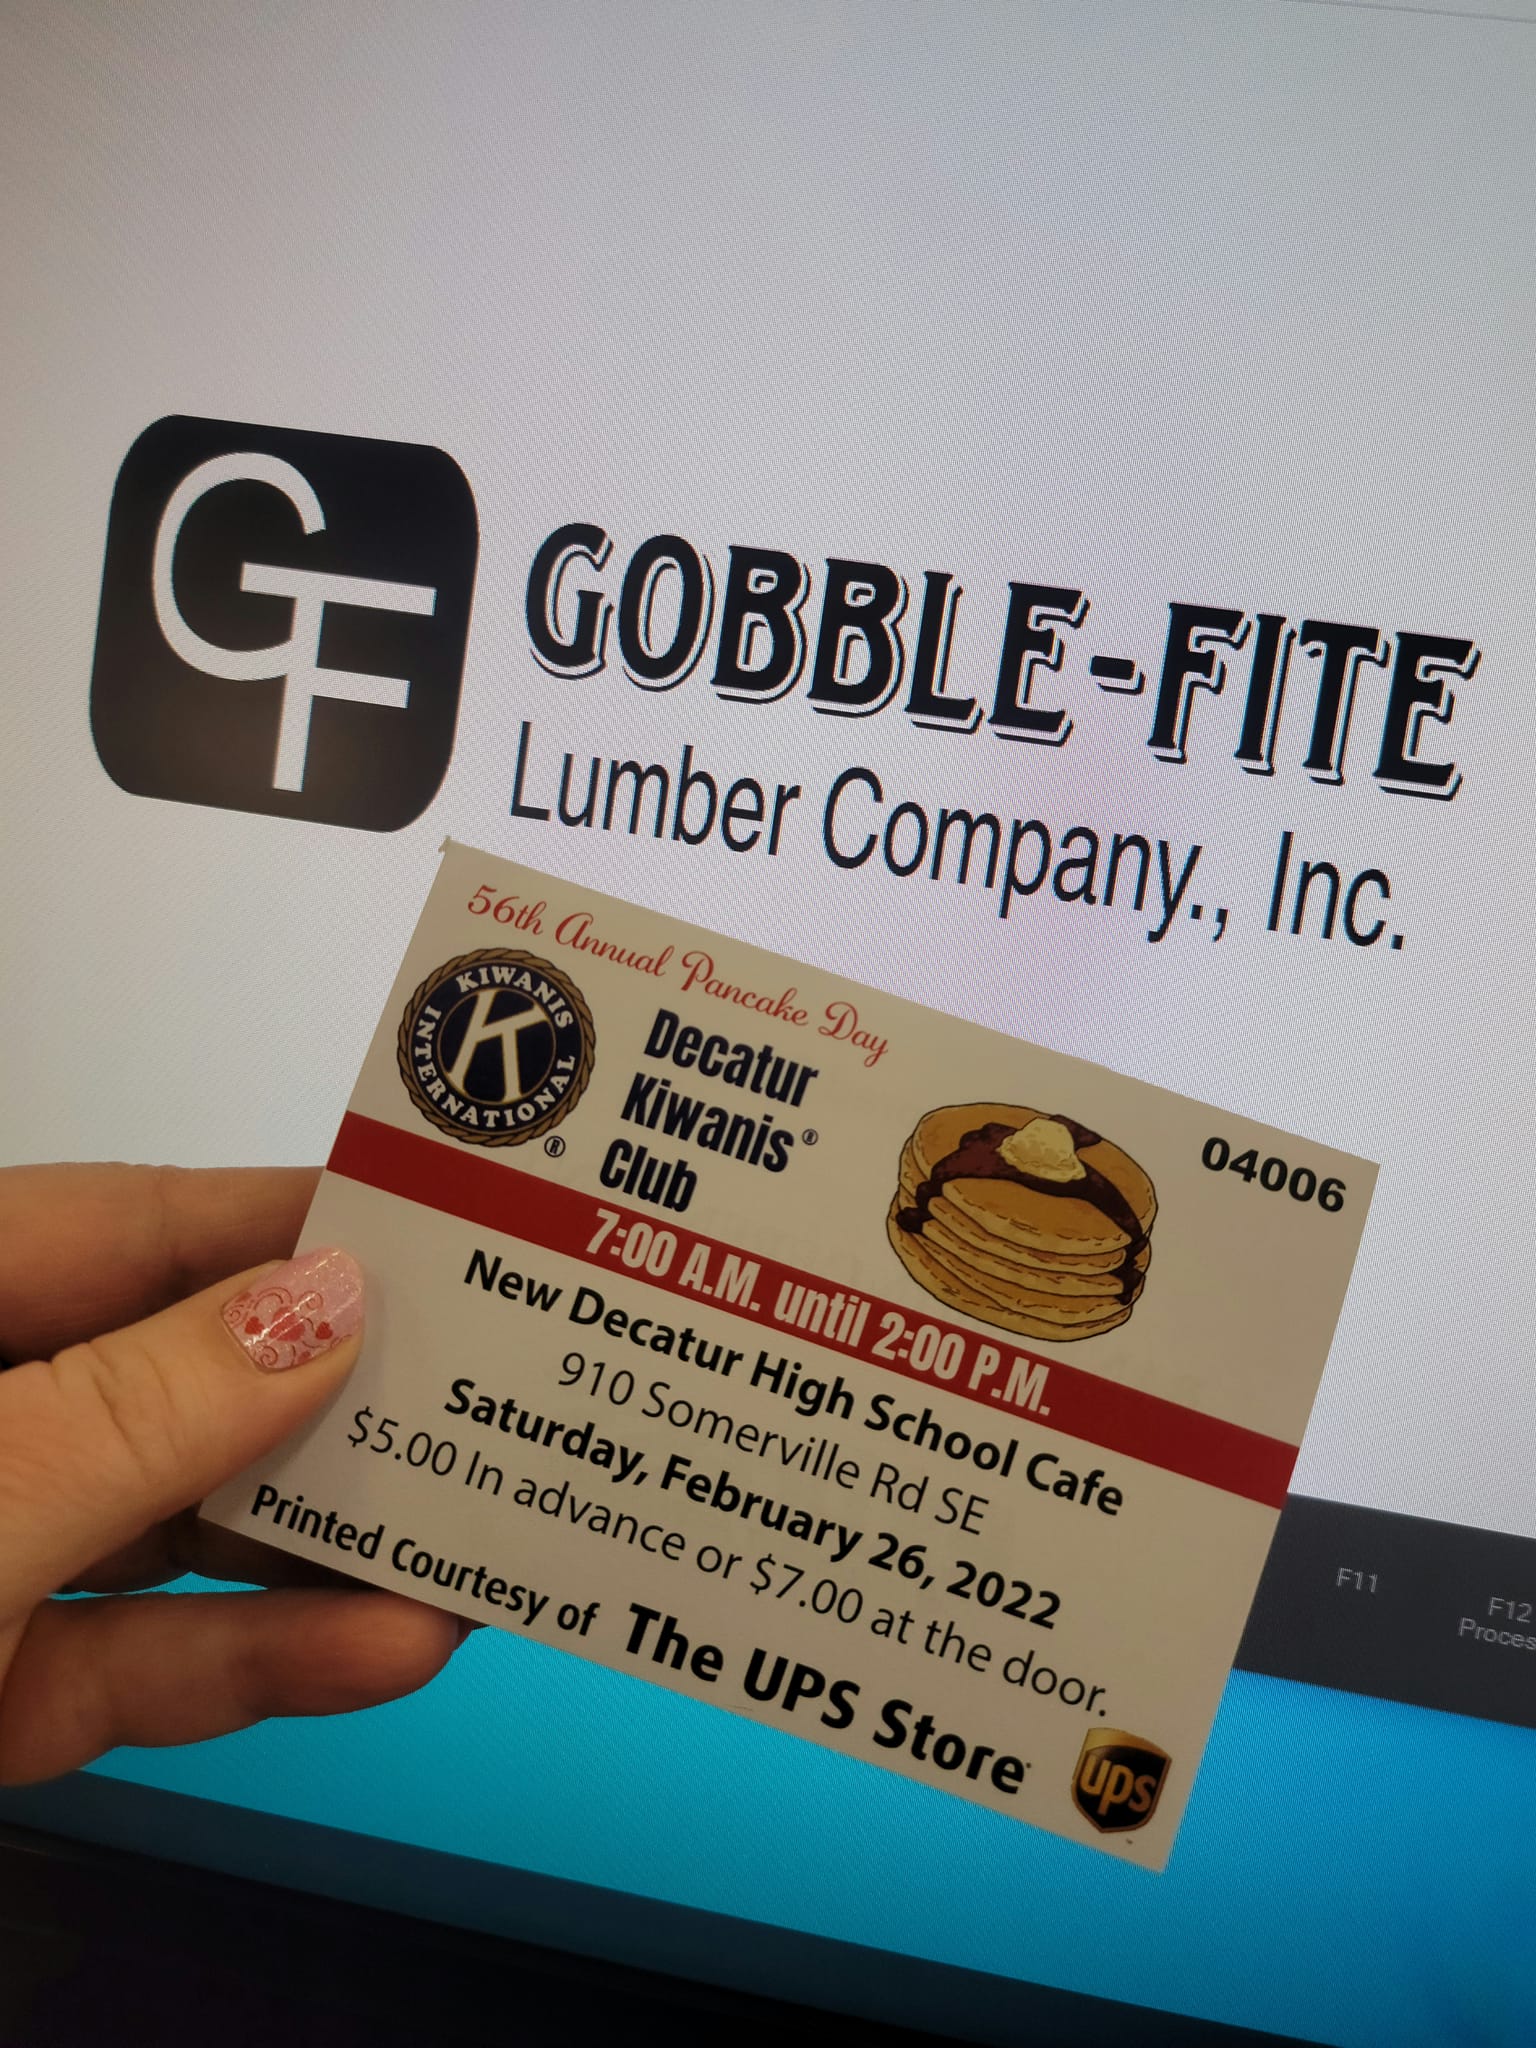 Gobble-Fite Lumber Company, Inc.